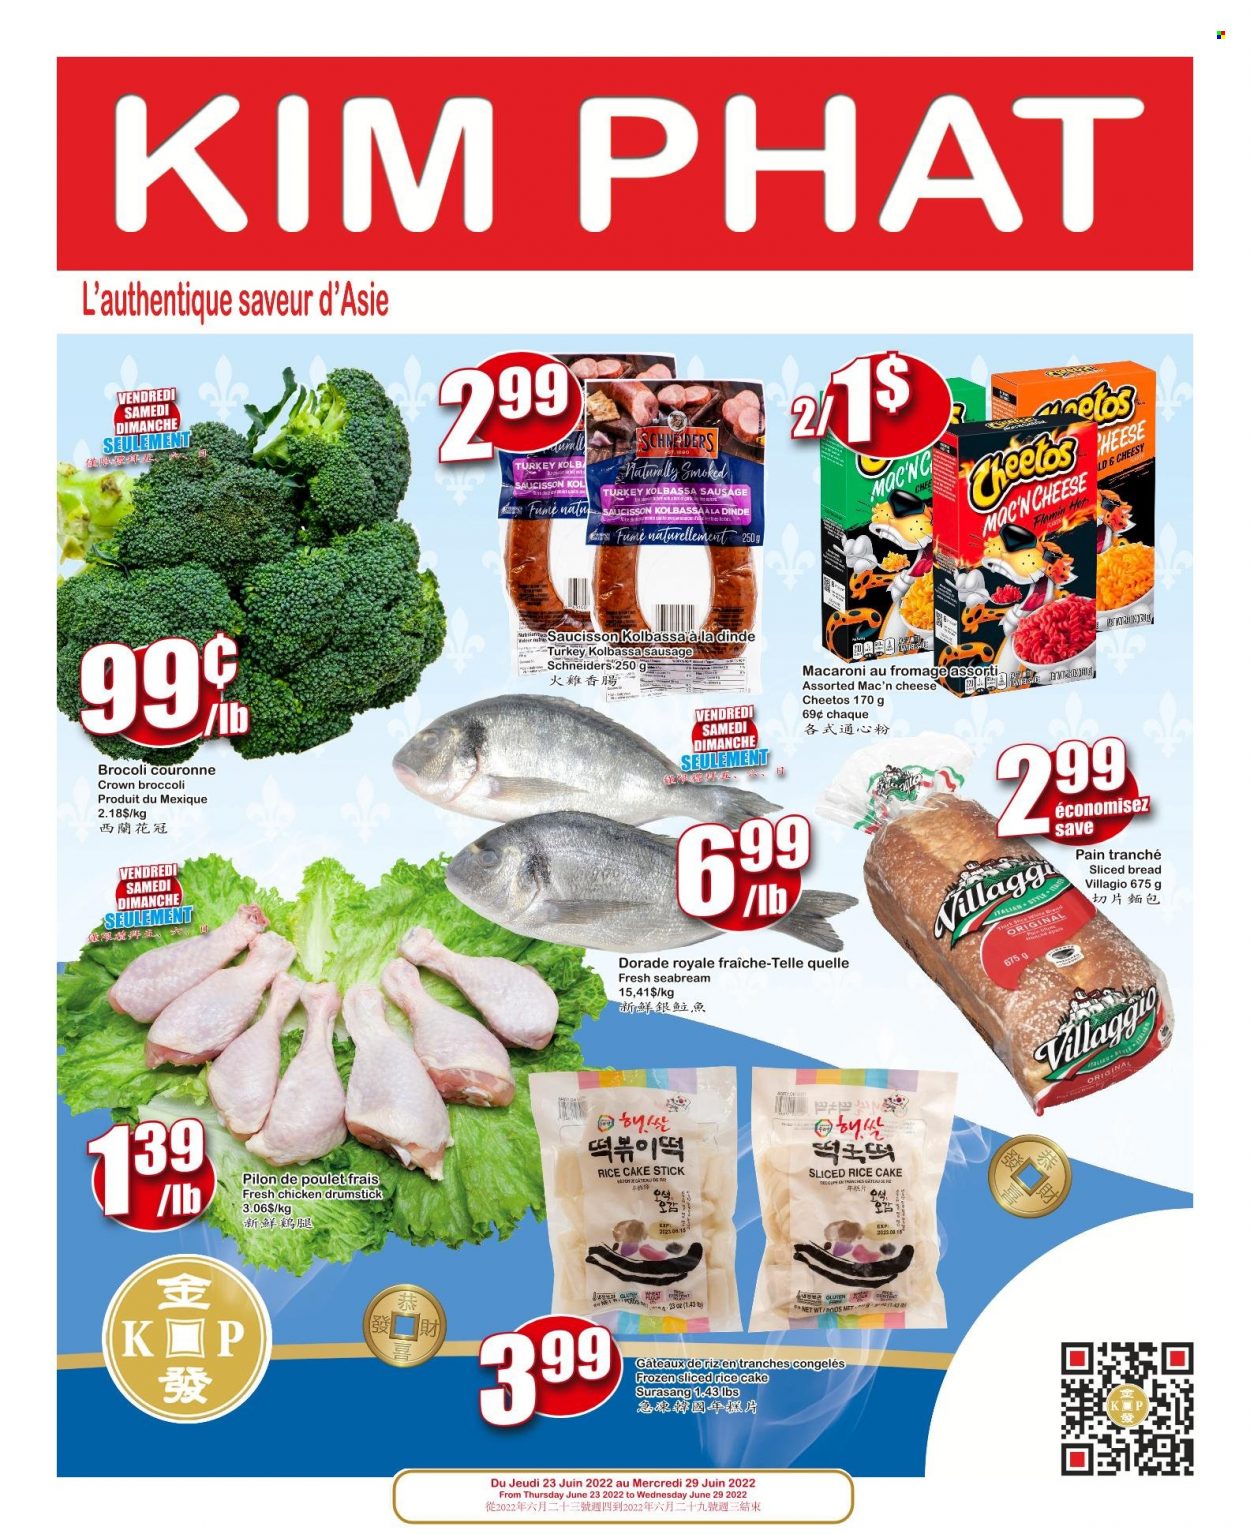 thumbnail - Circulaire Kim Phat - 23 Juin 2022 - 29 Juin 2022 - Produits soldés - gâteau, pain, brocoli, dorade, saucisson, pâtes, macaroni. Page 1.